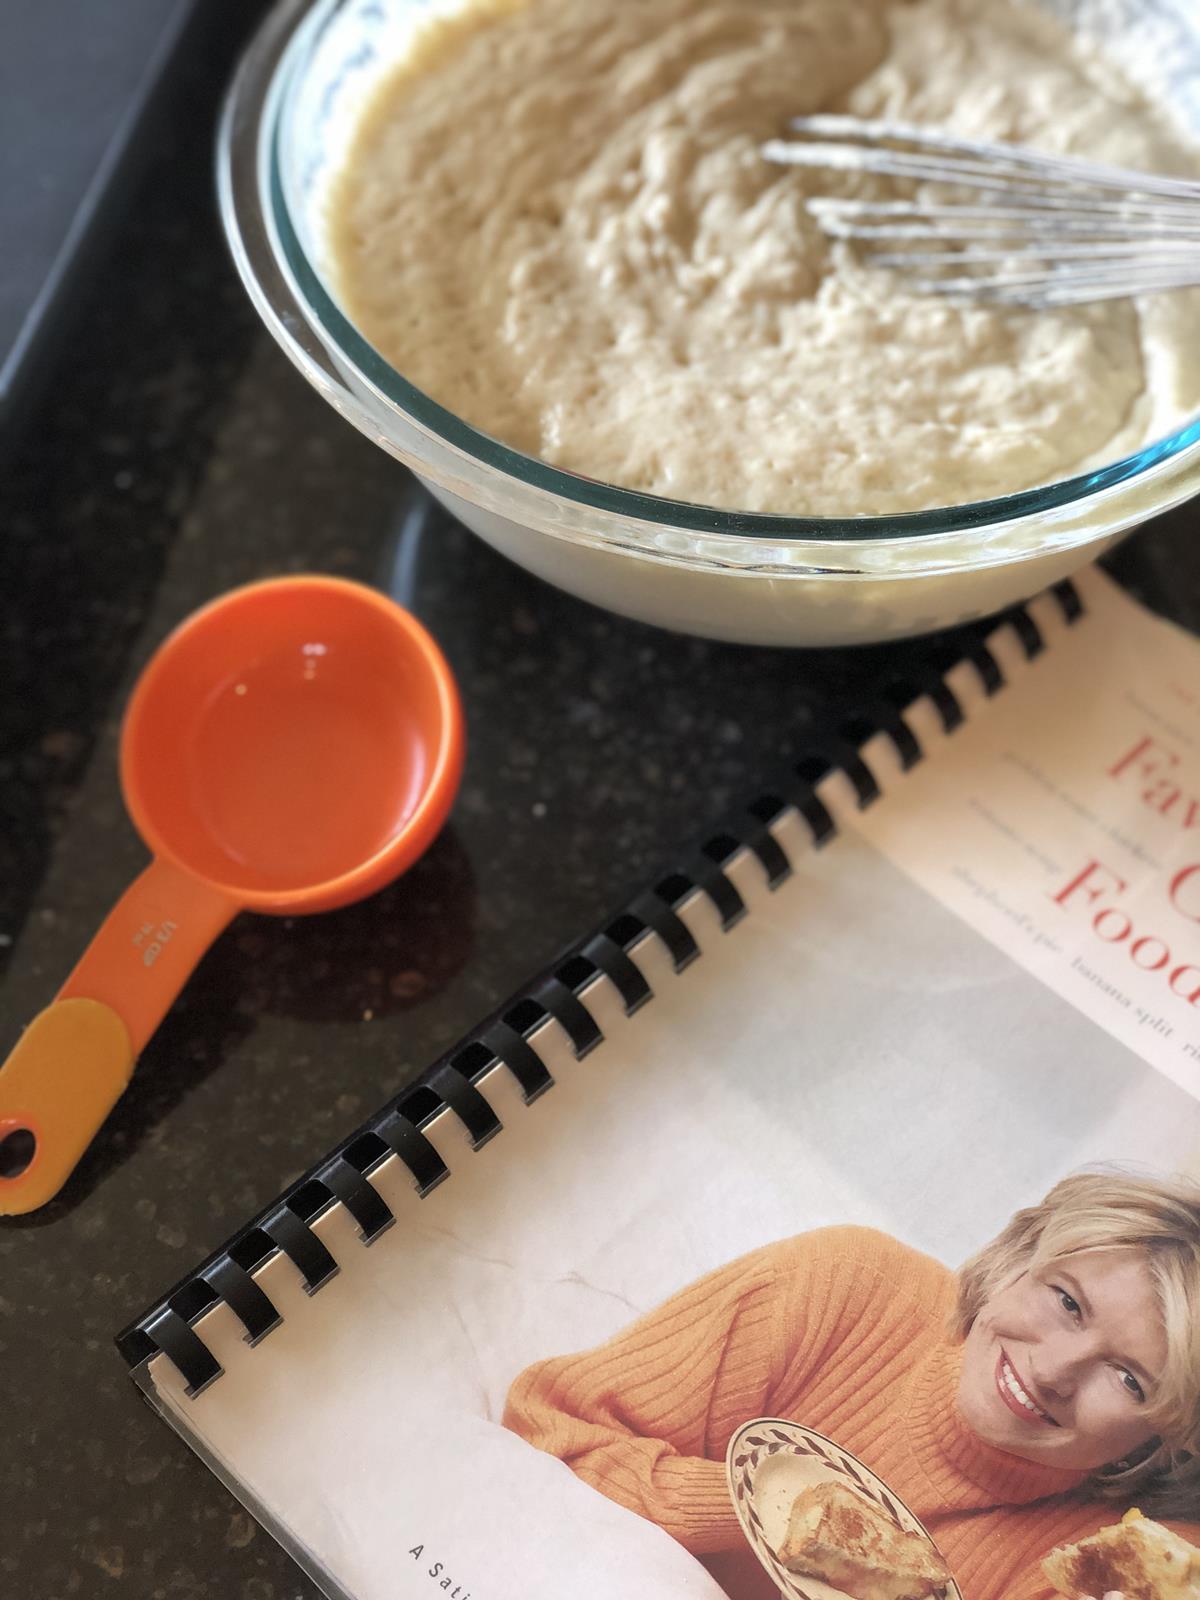 cookbook, measuring cup, and pancake batter